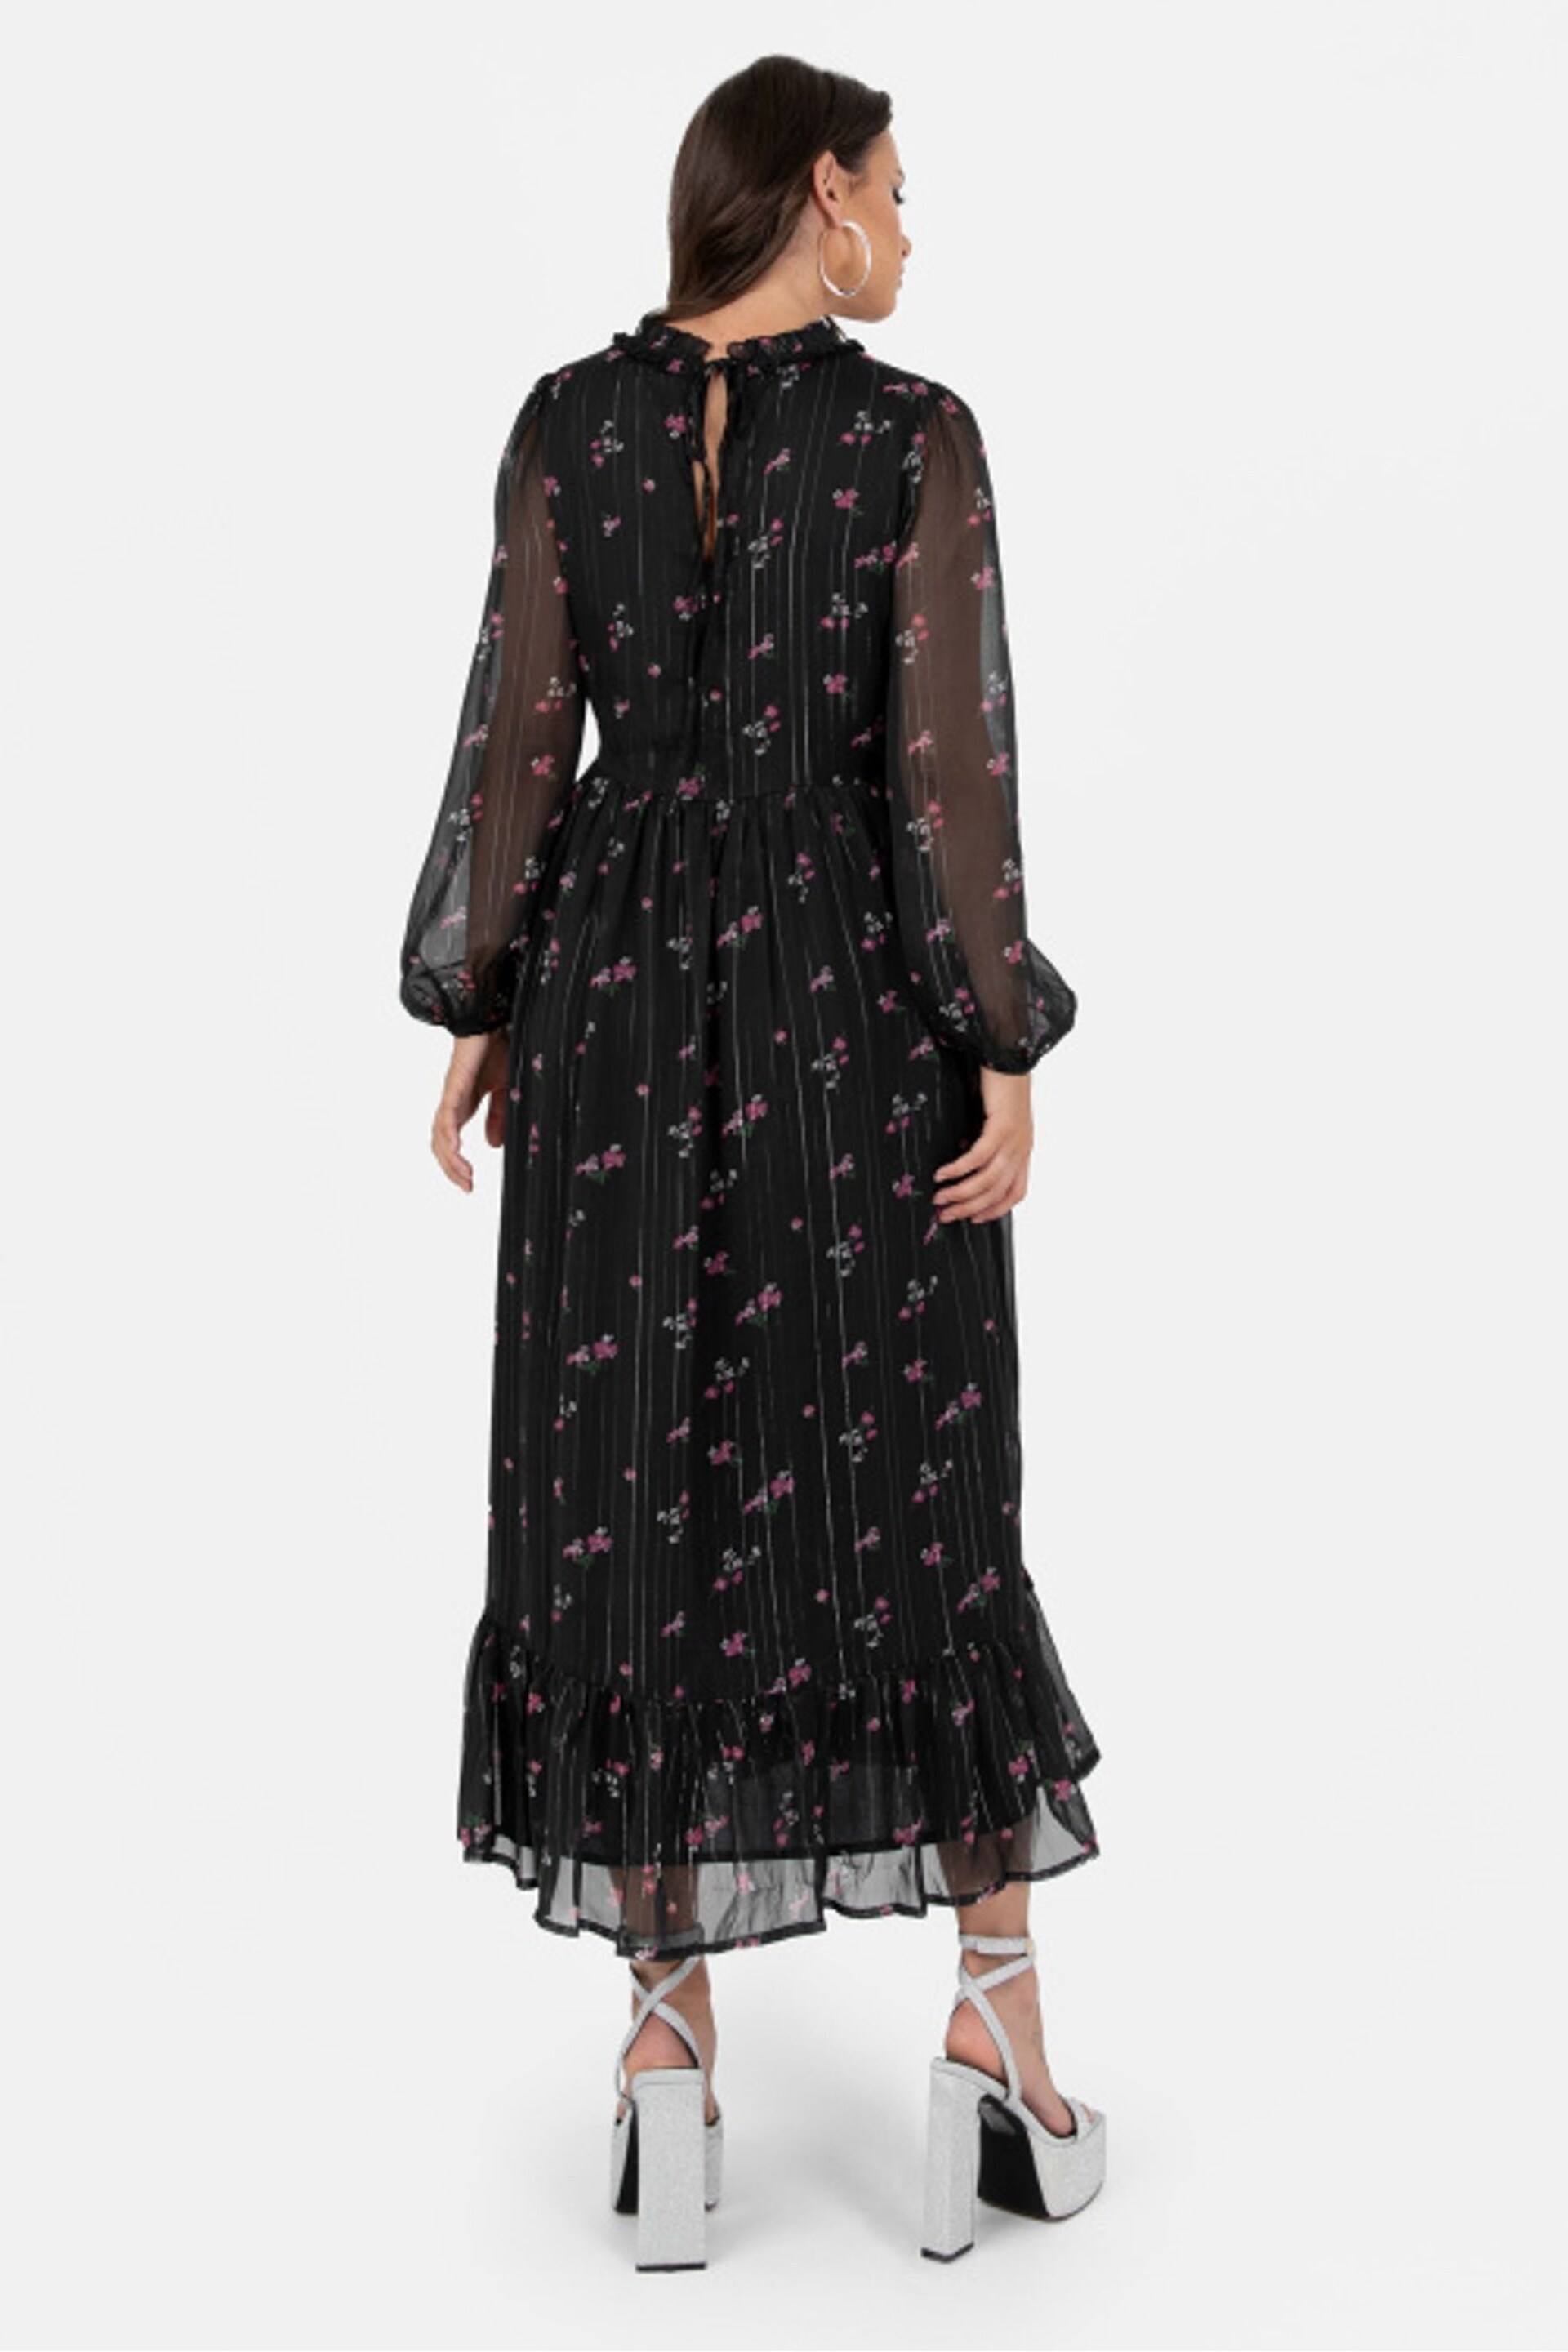 Lovedrobe Print Floral Frill Detail Black Midaxi Dress - Image 2 of 3